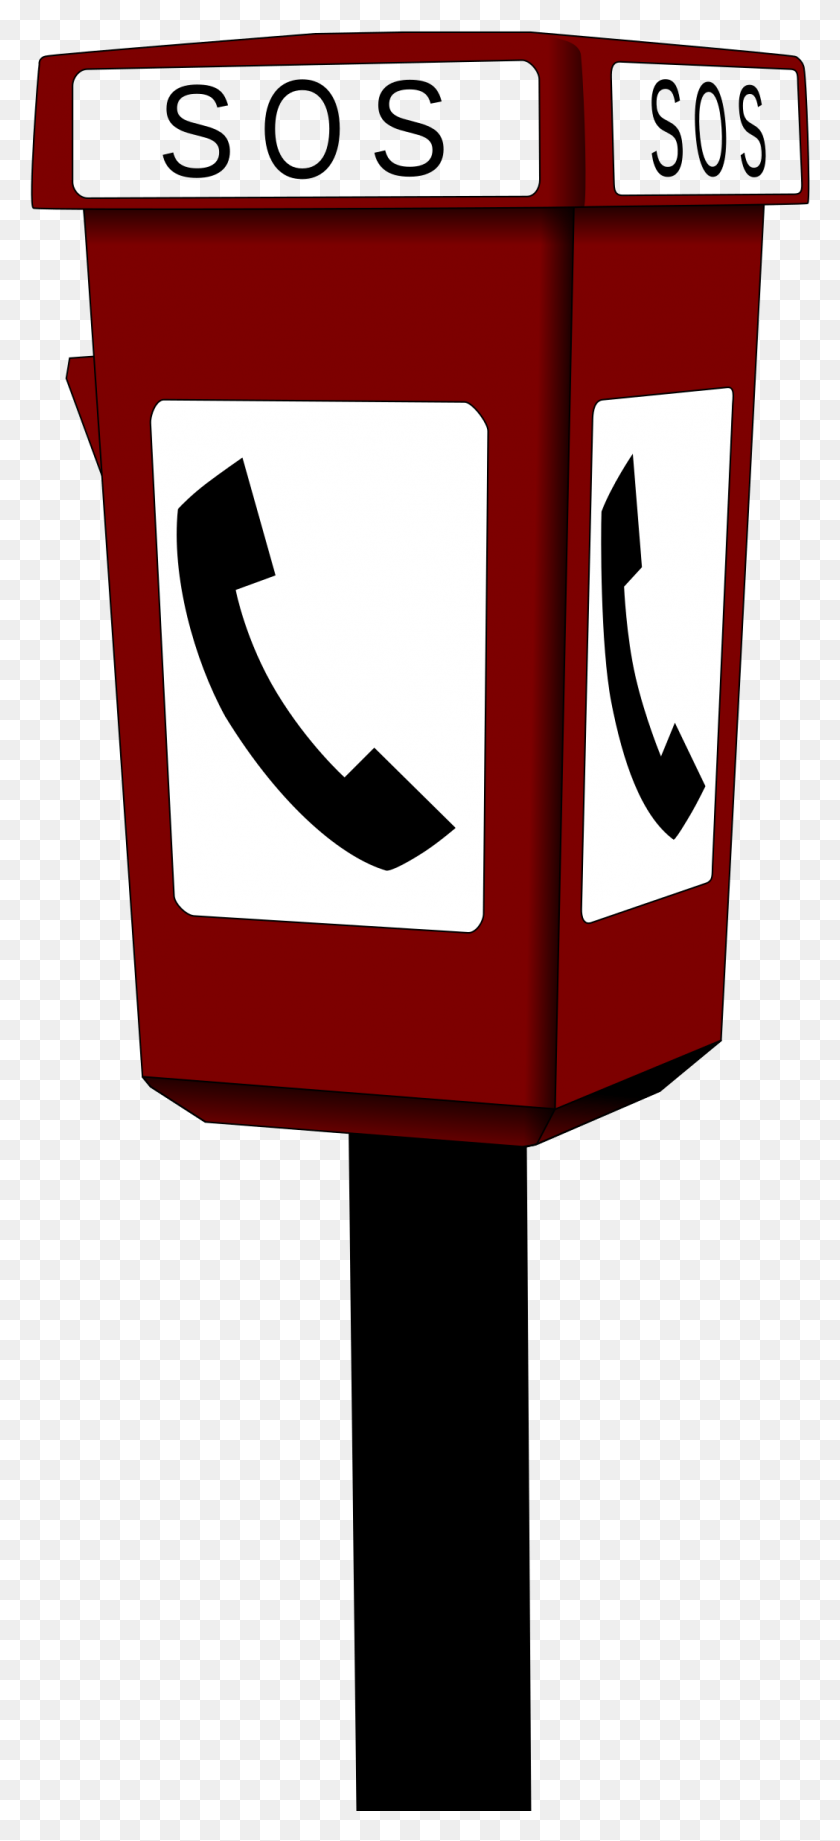 1048x2393 This Free Icons Design Of Emergency Phone, Machine, Gas Pump, Pump Hd Png